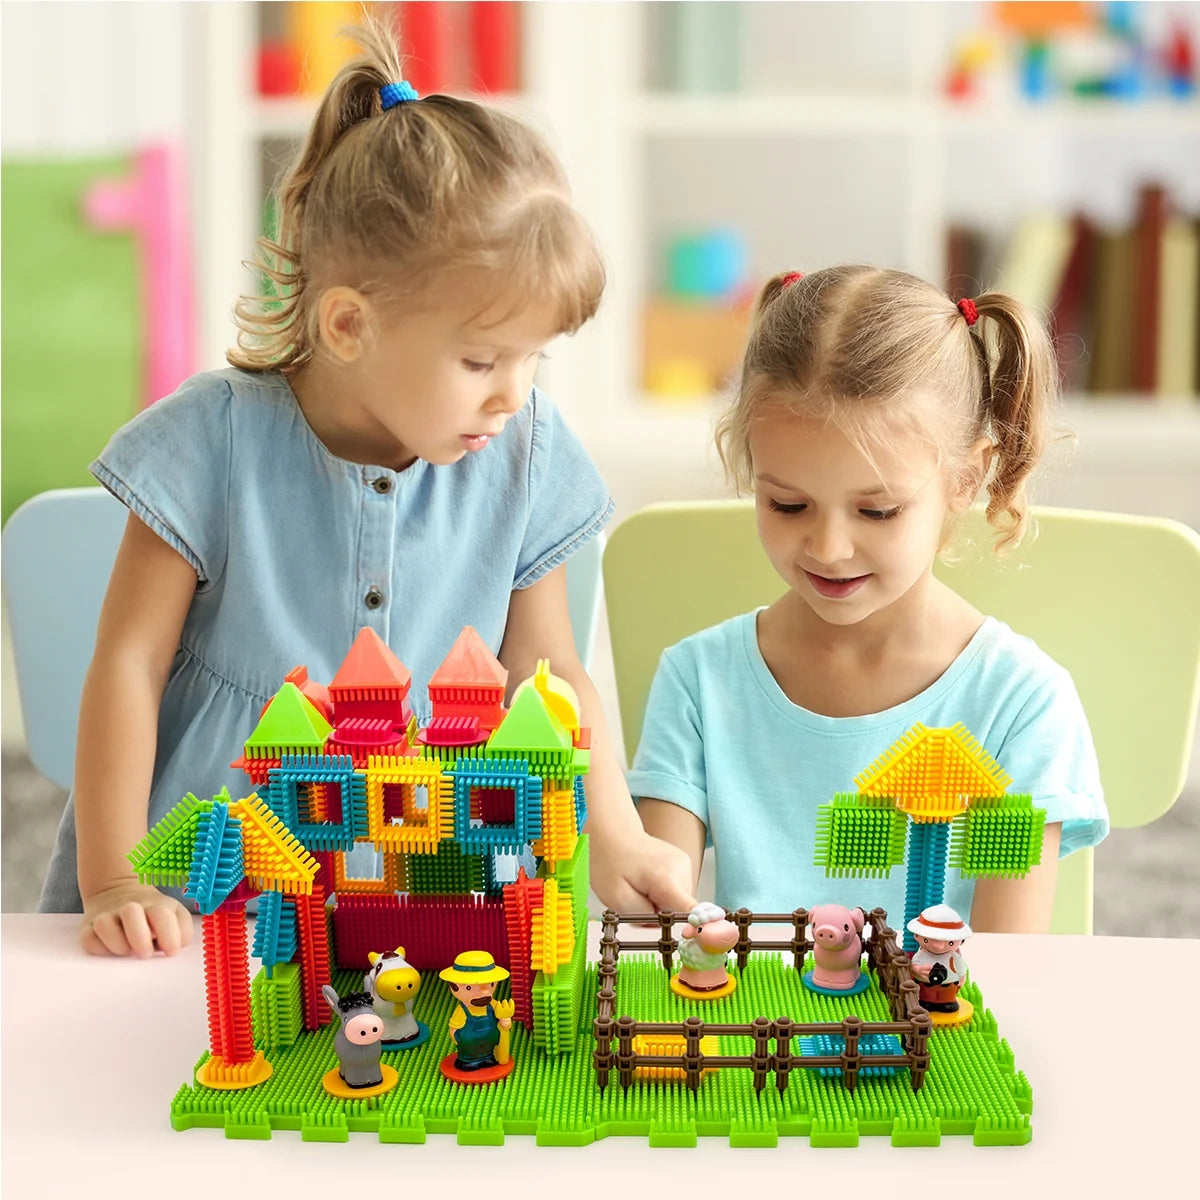 100 PC Farm Theme, Hedgehog Building Blocks, Building Toys, Soft Toys for Kids 3+